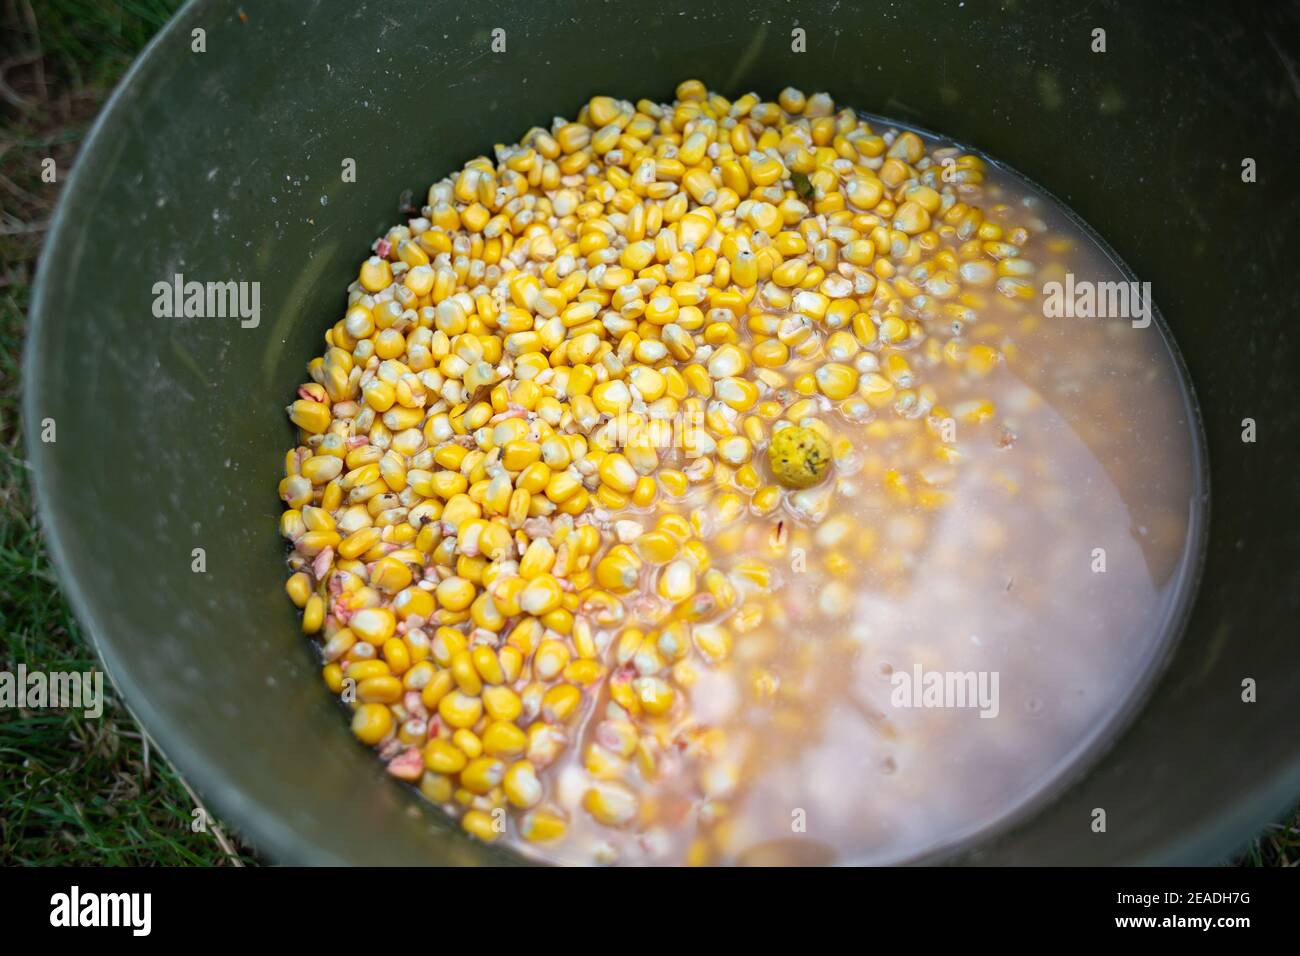 A bucket full of corn bait for fishing Stock Photo - Alamy